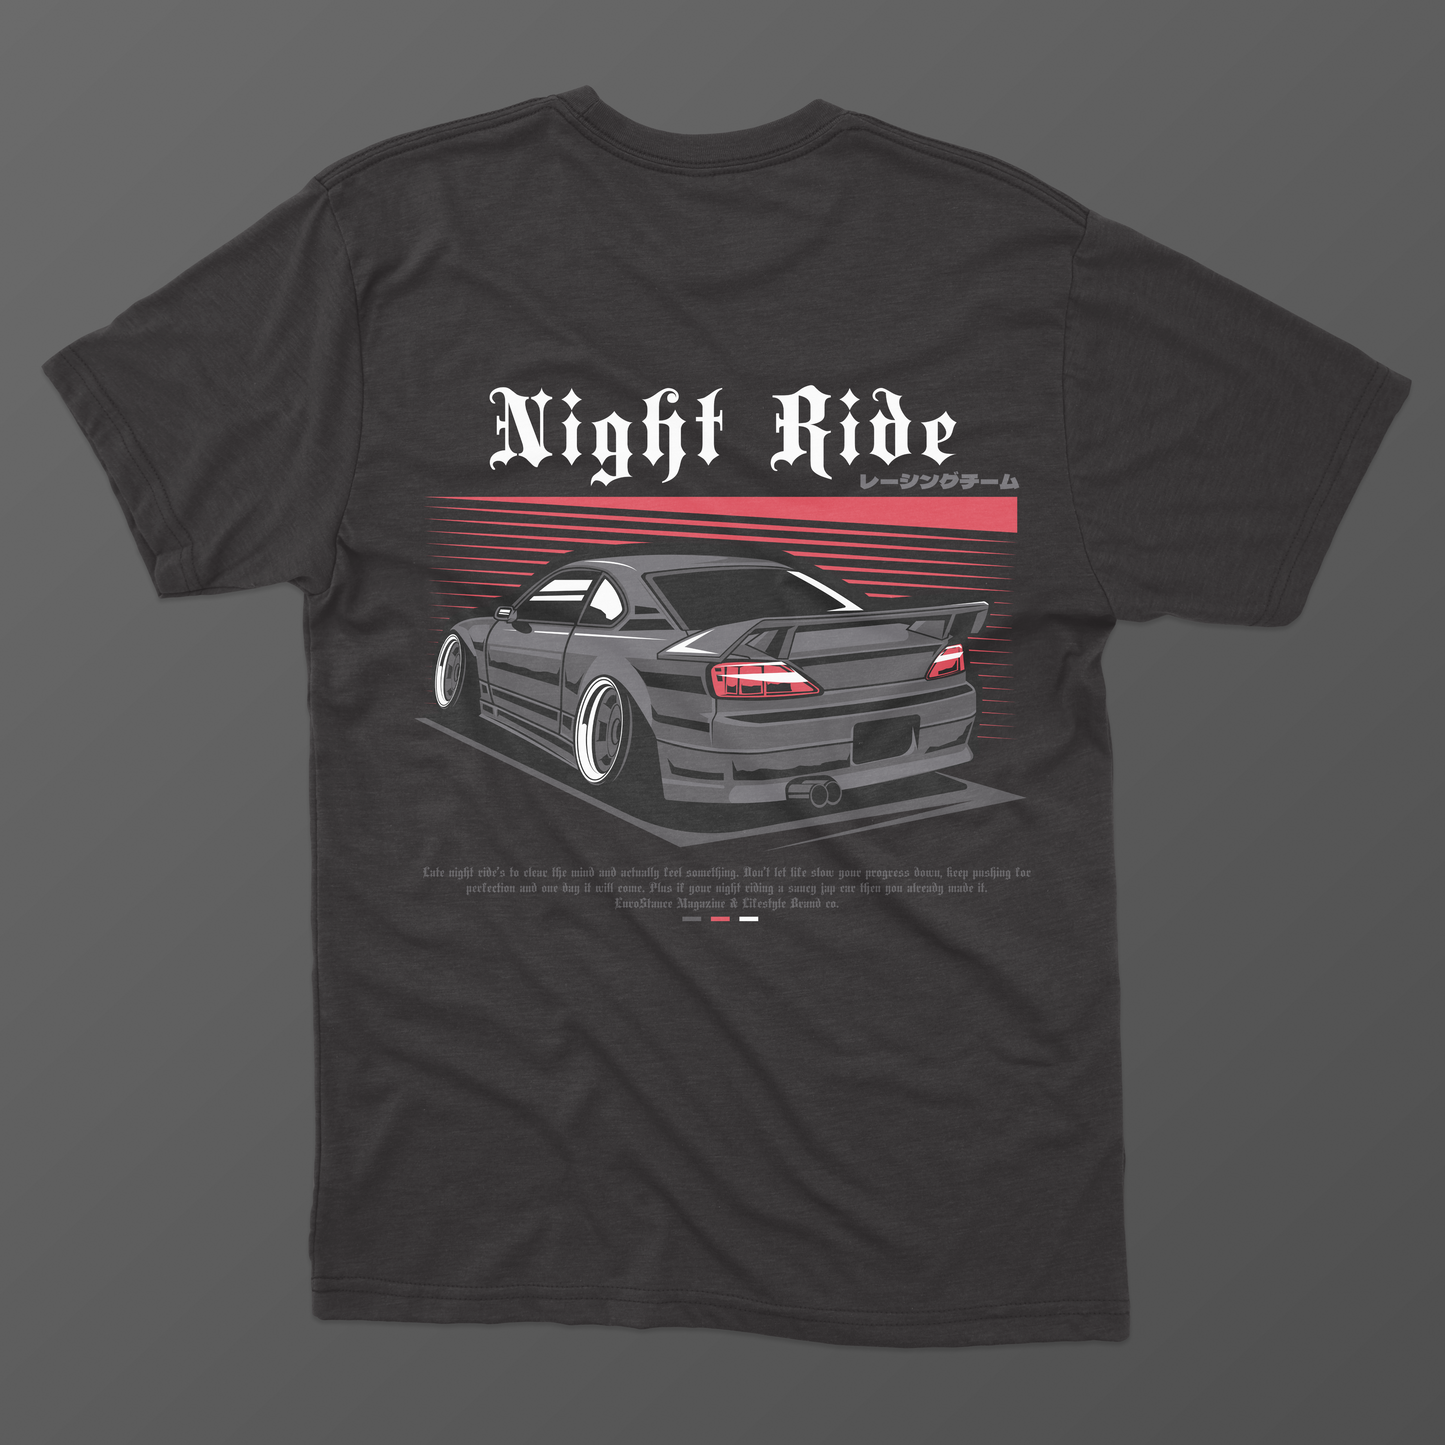 Night Ride 🌙 - Tee